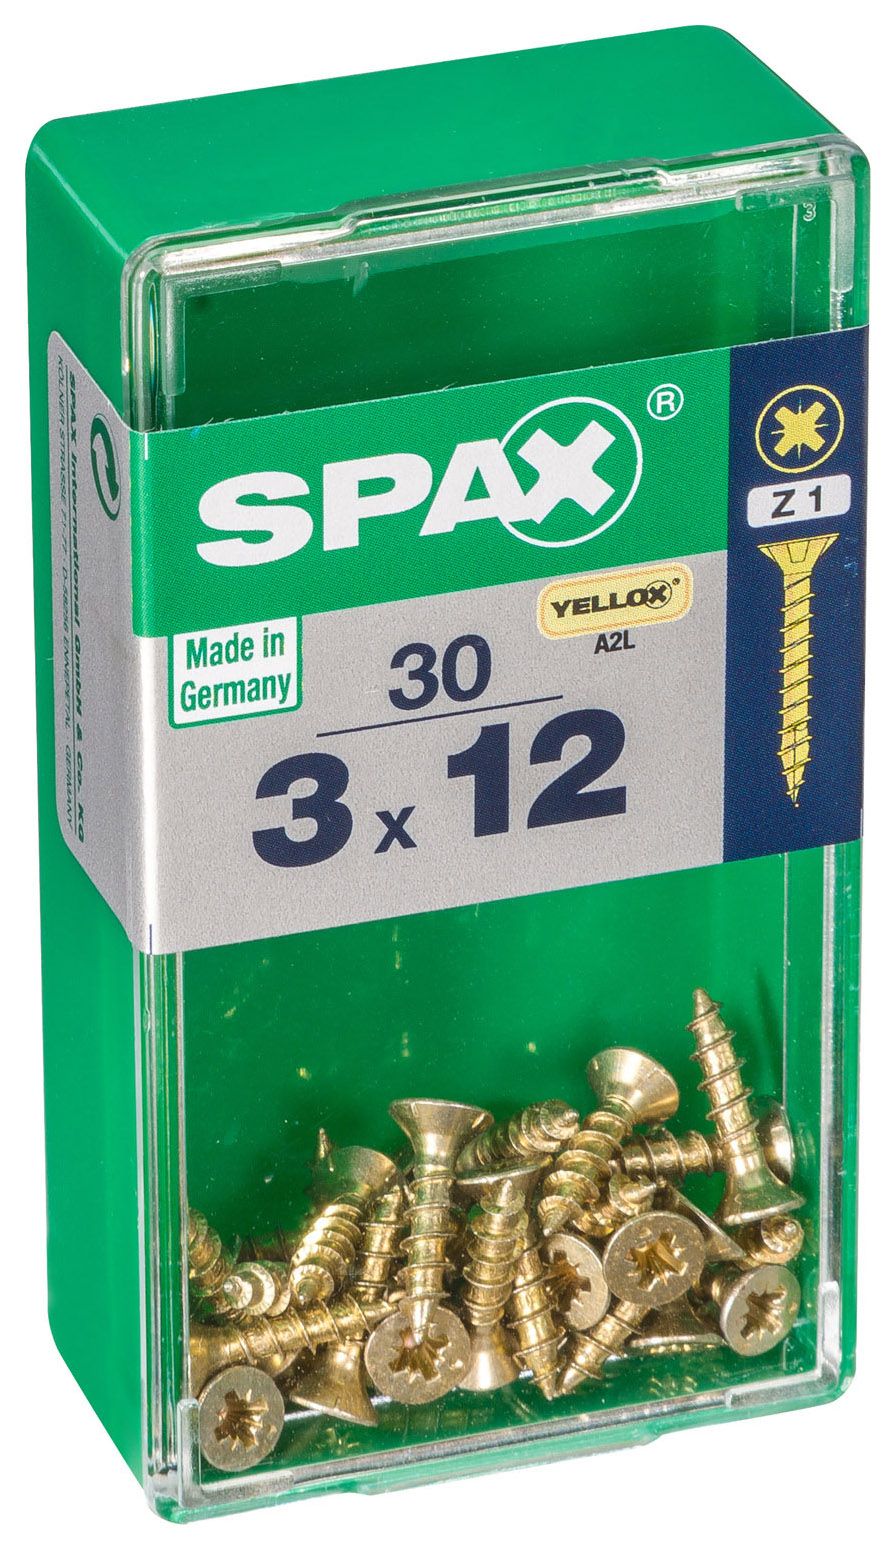 Spax PZ Countersunk Zinc Yellow Screws - 3 x 12mm Pack of 30